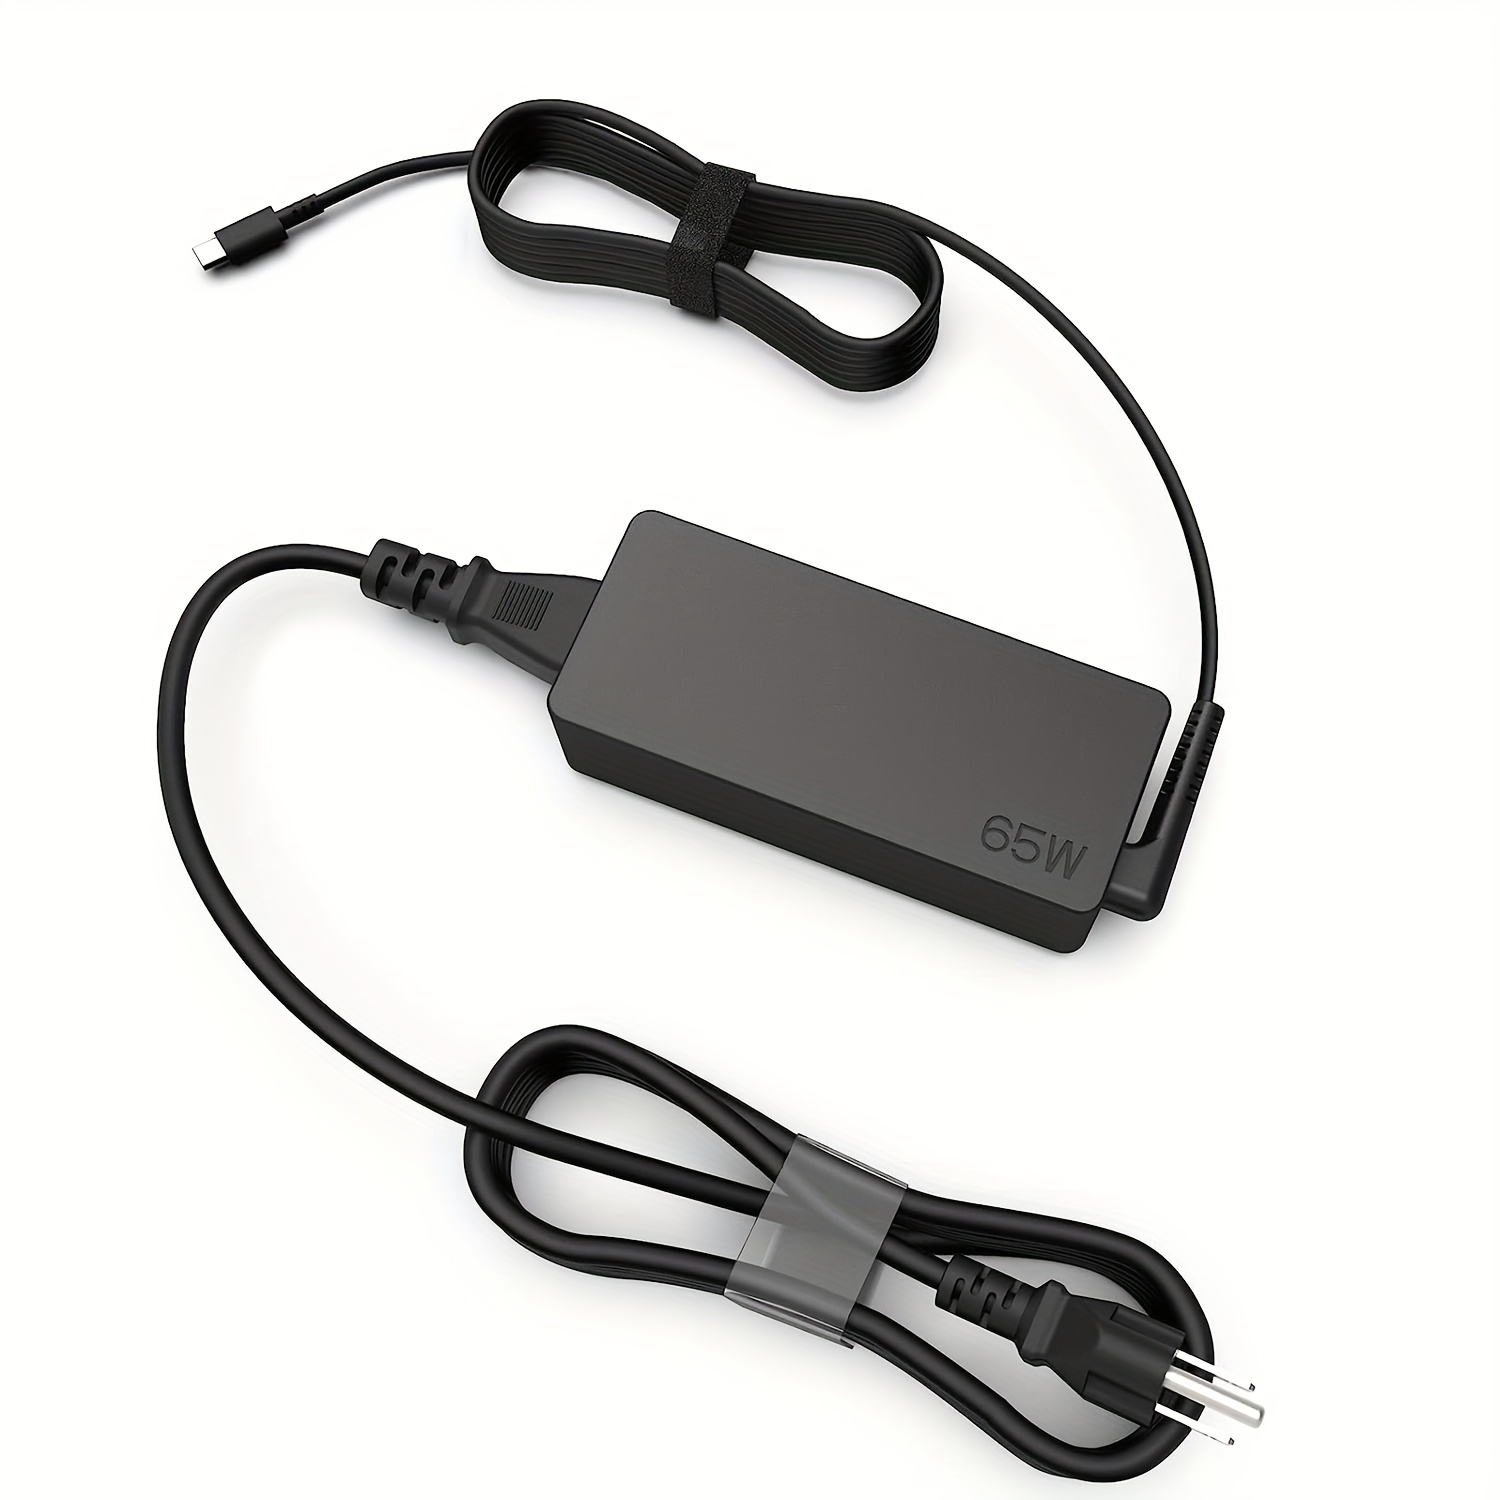 Cargador universal Chromebook USB C para HP 65W 45W USB-C cargador  portátil, repuesto para Lenovo Thinkpad/Yoga, Dell Chromebook 3100,  Latitude 5420